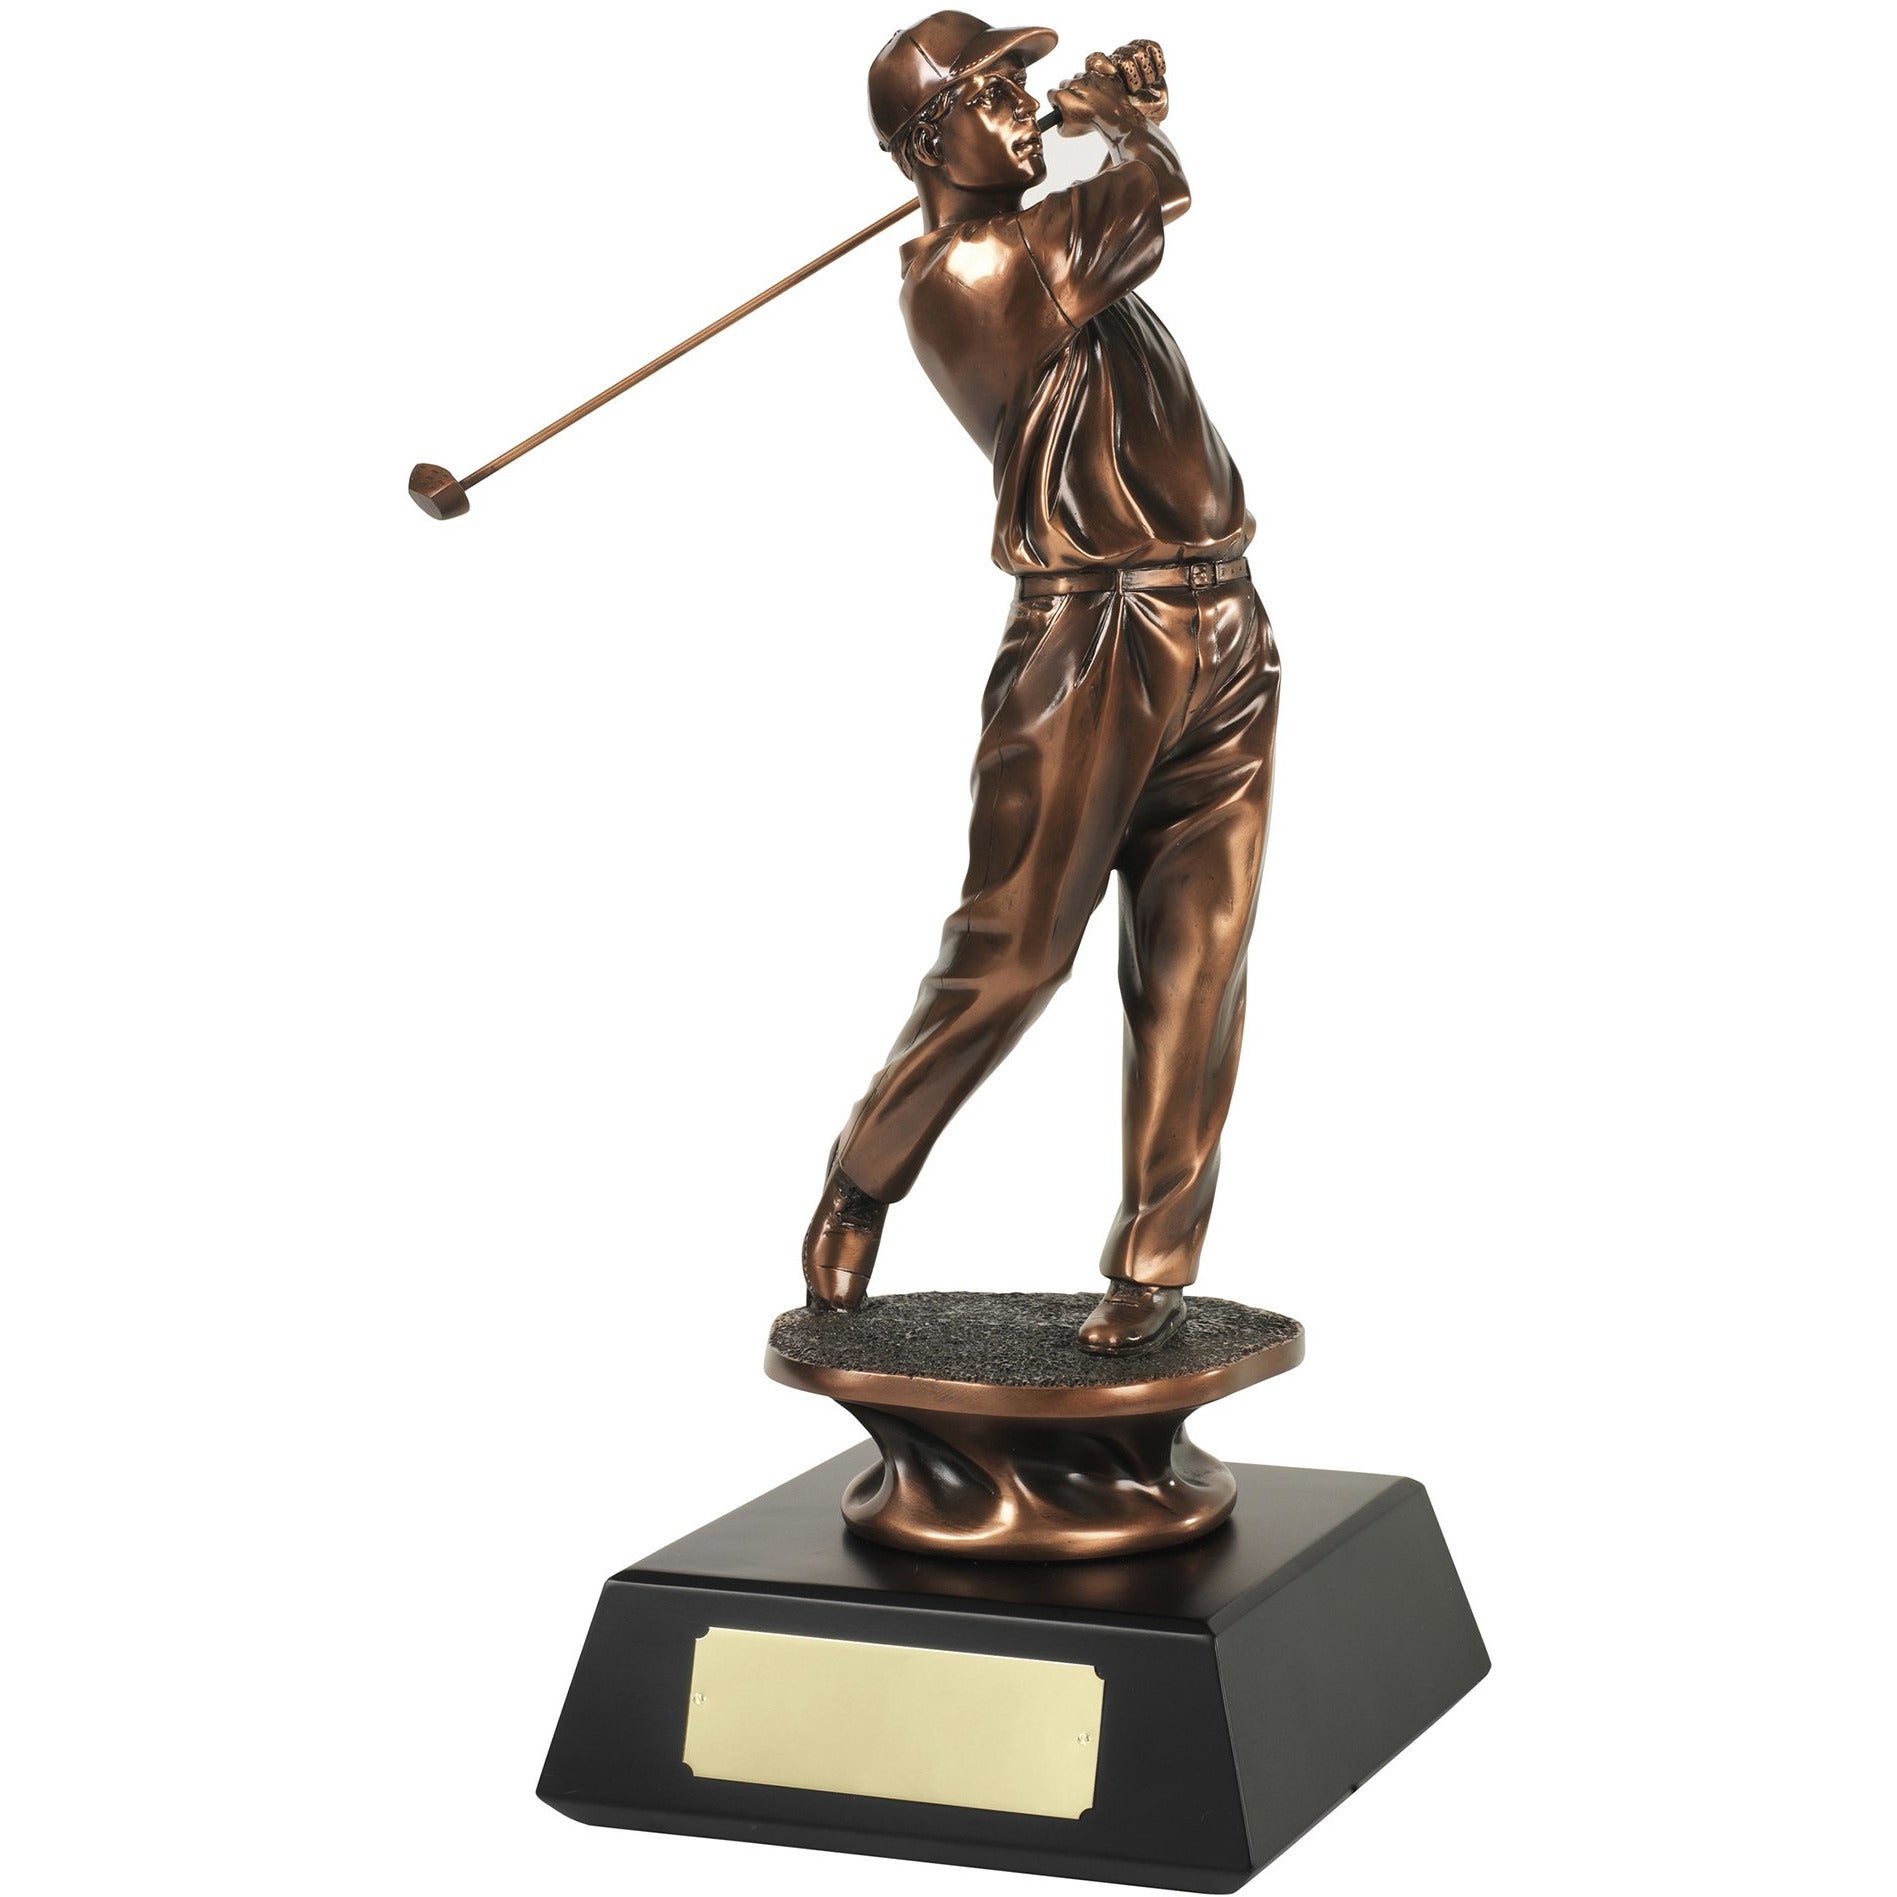 Golf Swing Bronze Plated Golf Figurine Trophy